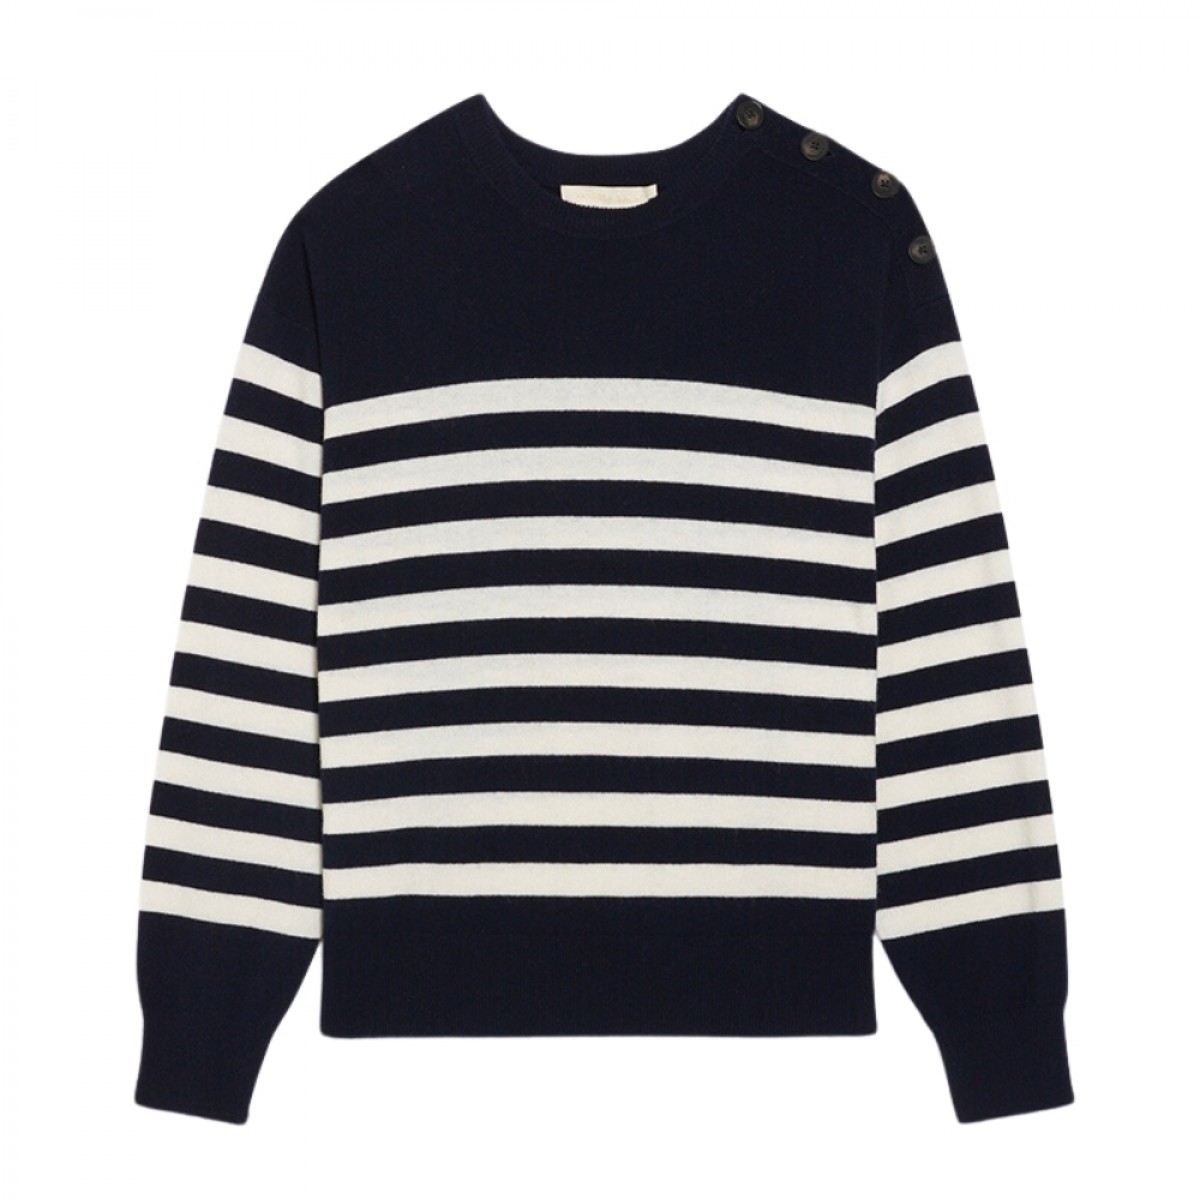 clarisse sweater - marine / off-white - front